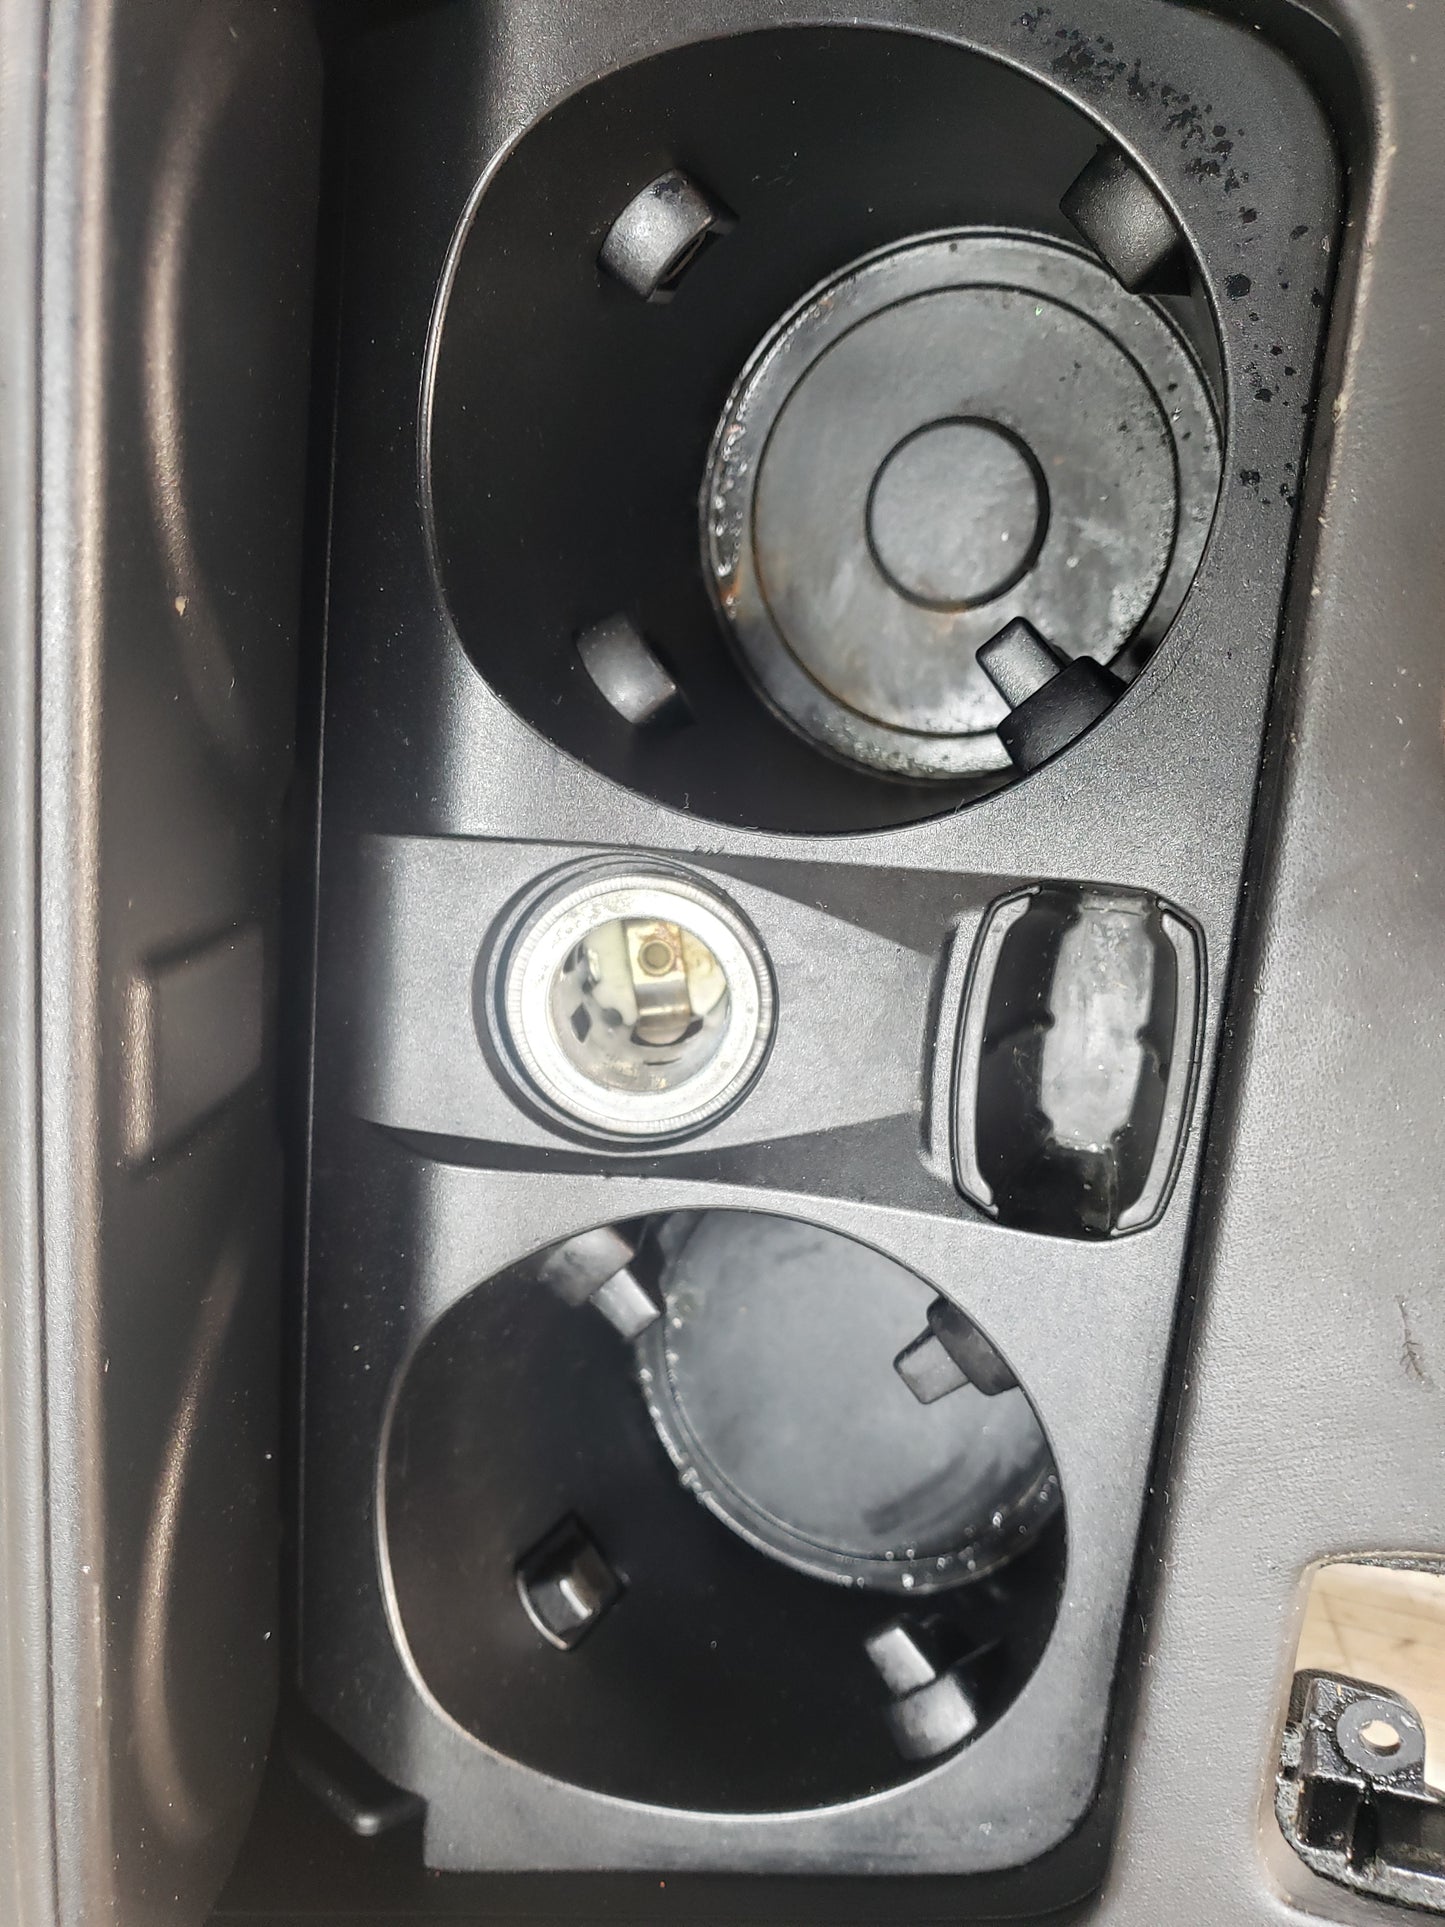 BMW 14-16 F10 M5 Central Console Cup Holder Ash Tray Trim Cover Black LCI